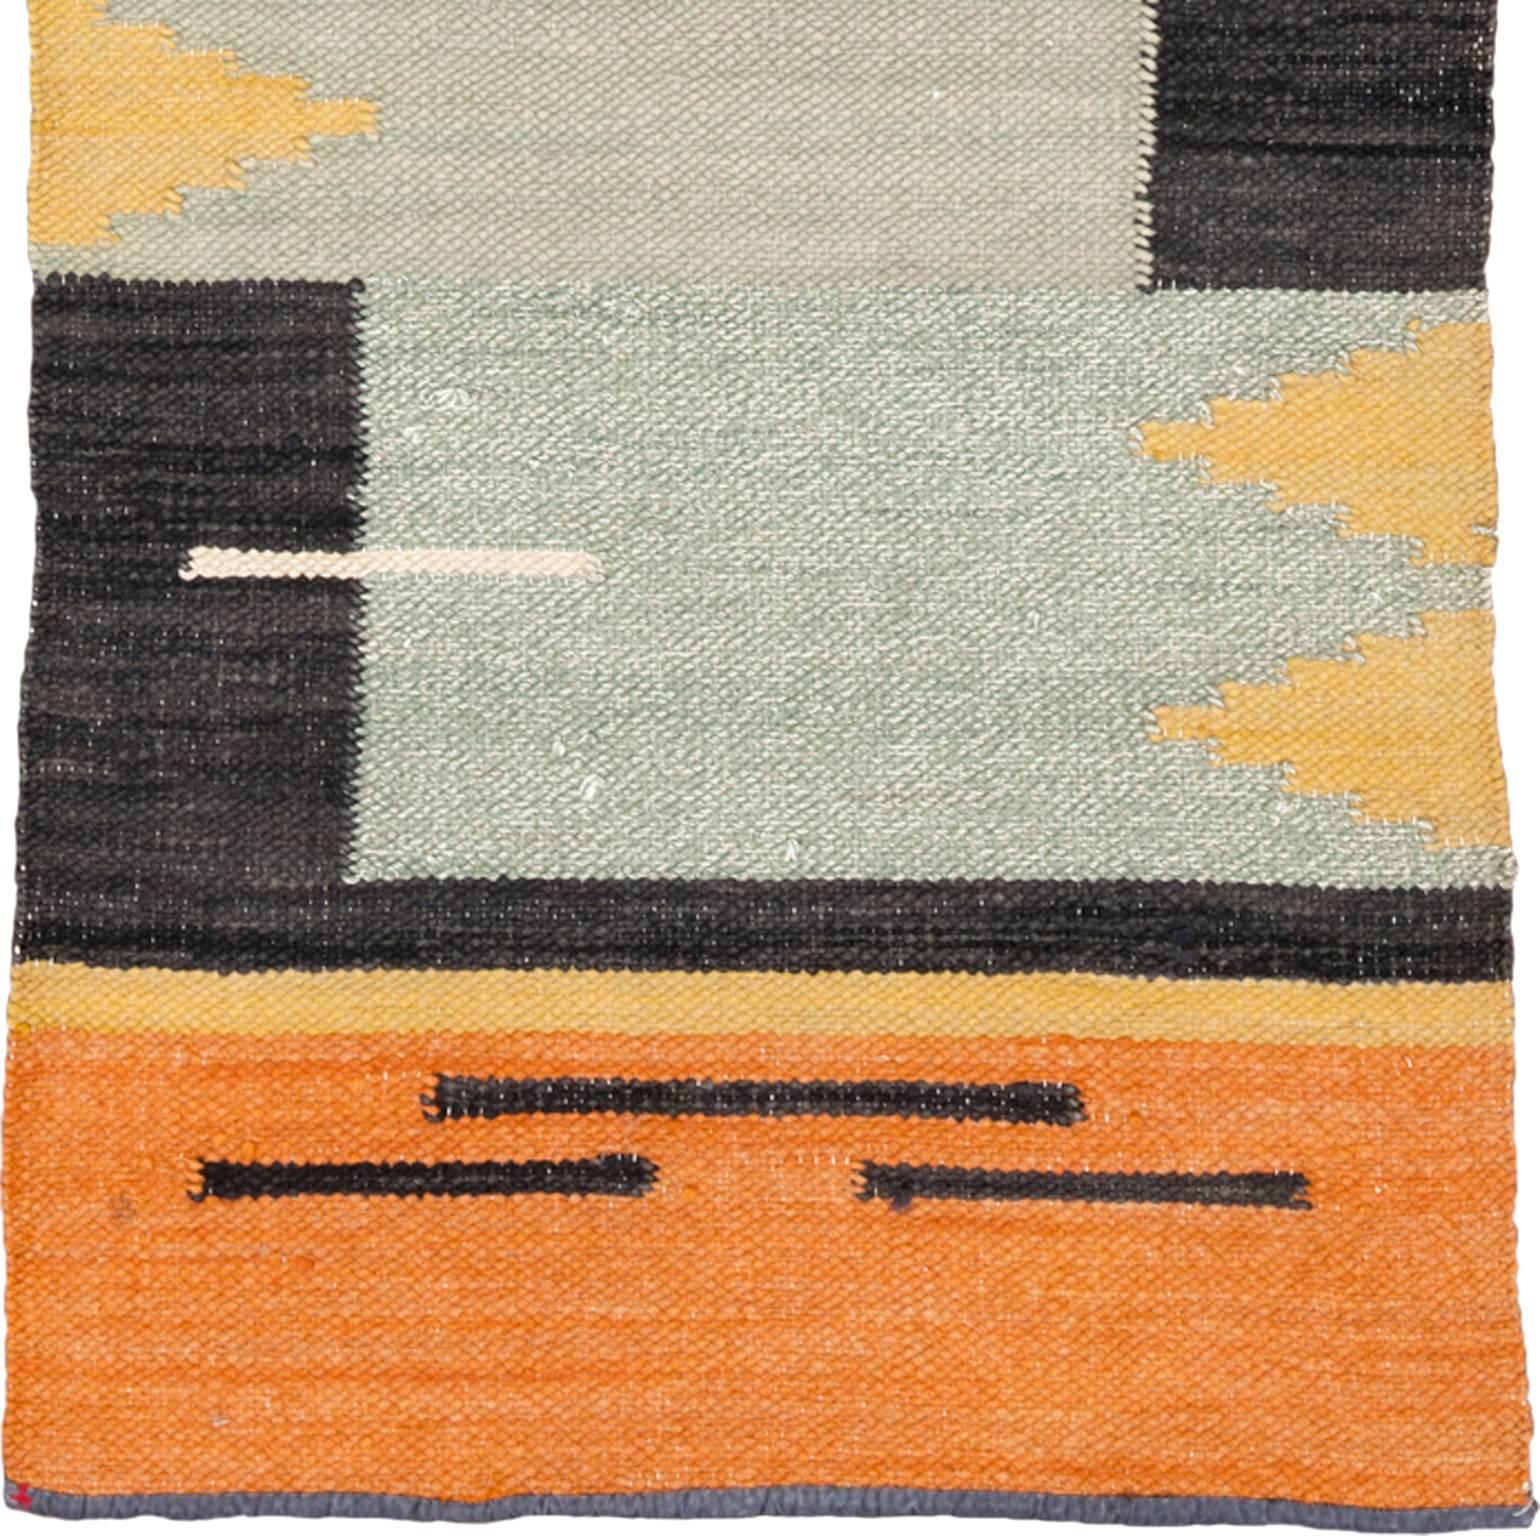 Finnish carpet, 1930s
Finland, circa 1930
Handwoven.